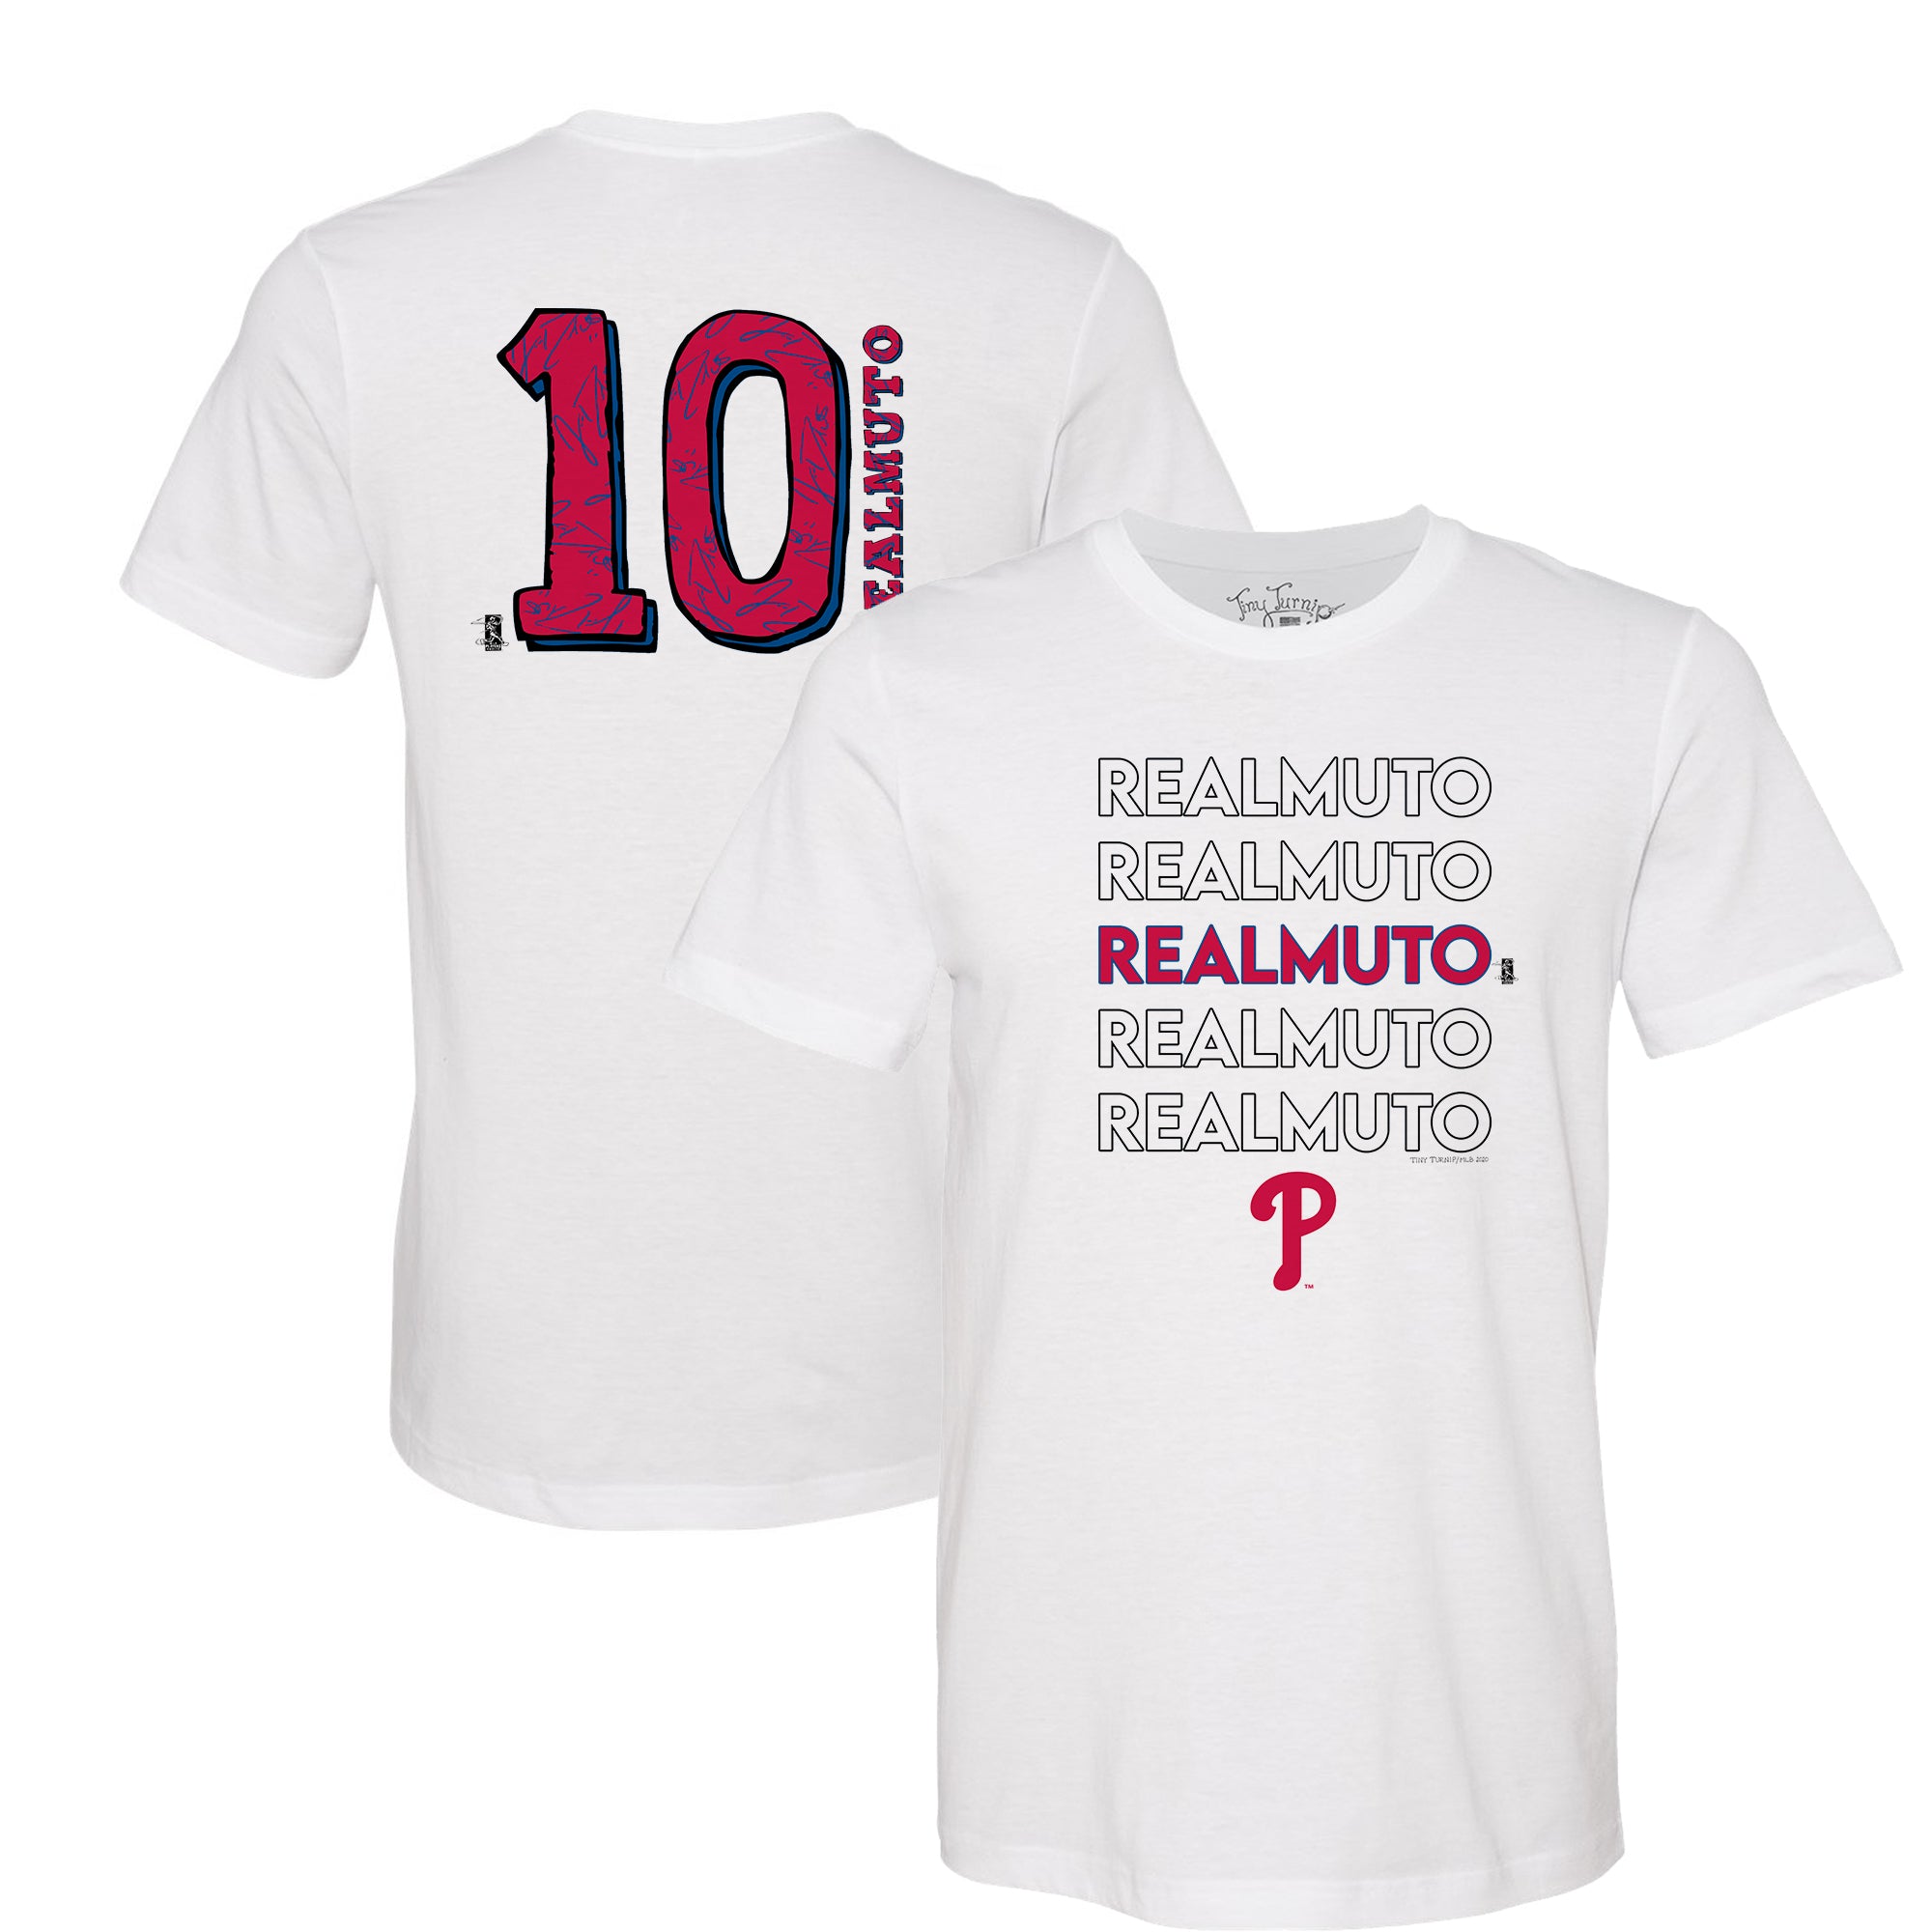 Gildan, Tops, Pink Phillies Realmuto Tshirt Size Medium